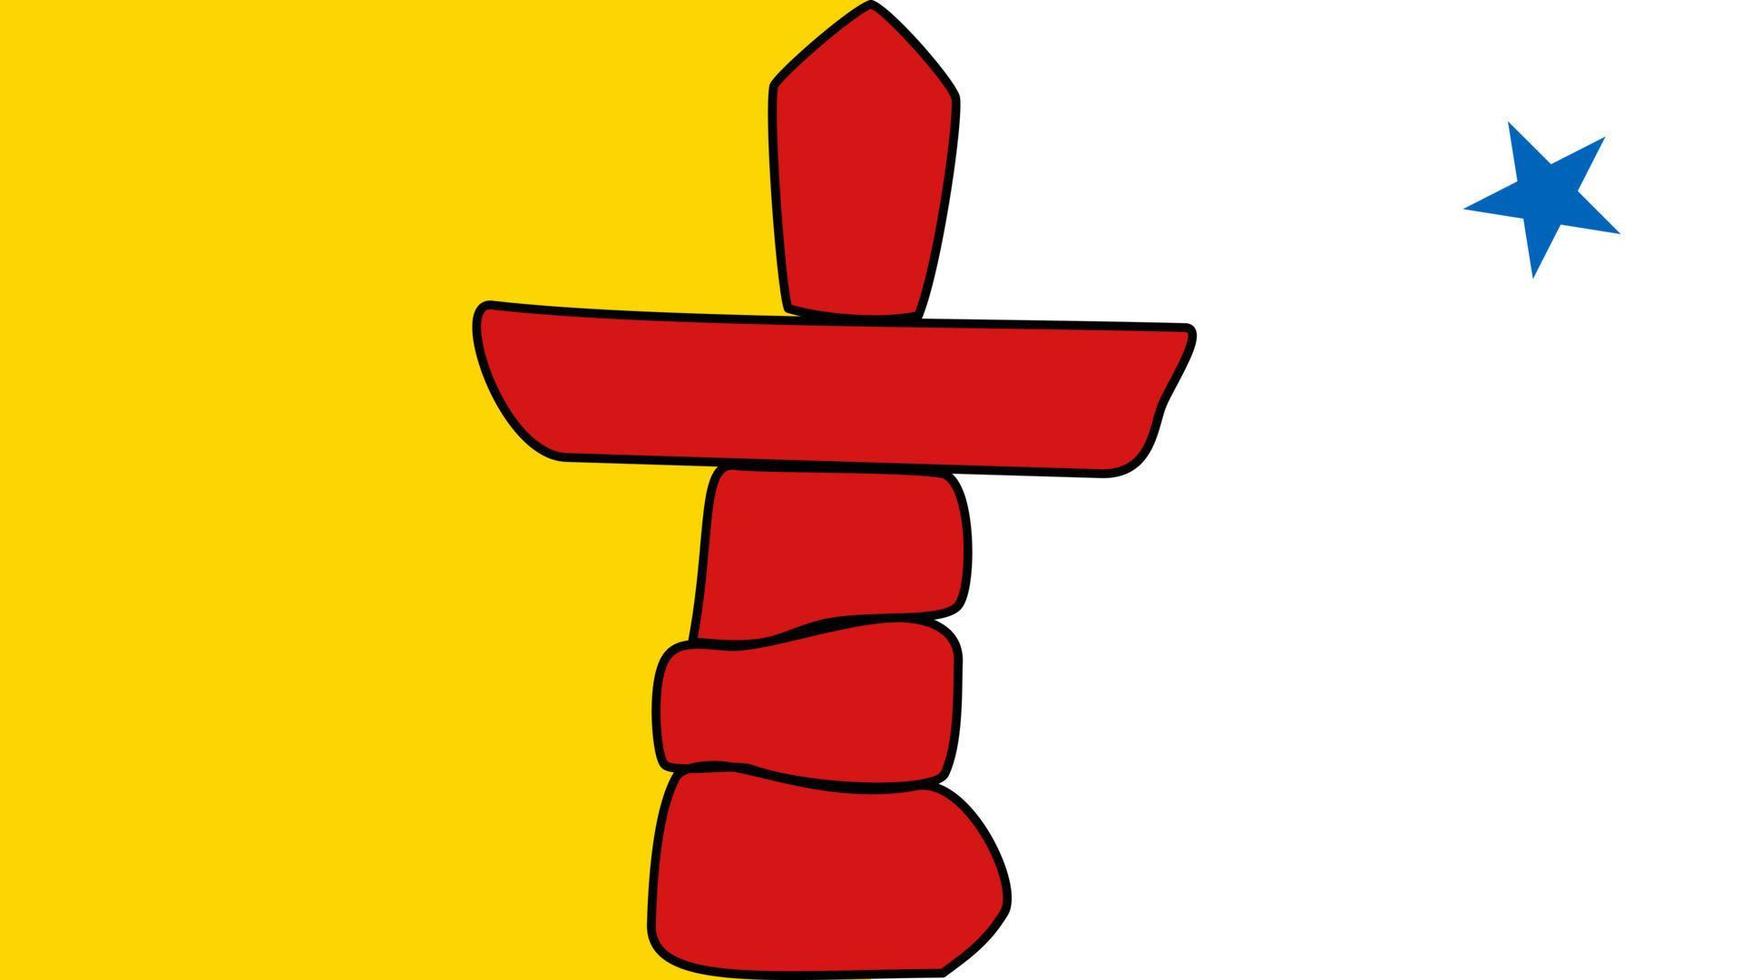 Nunavut flag, province of Canada. Vector illustration.